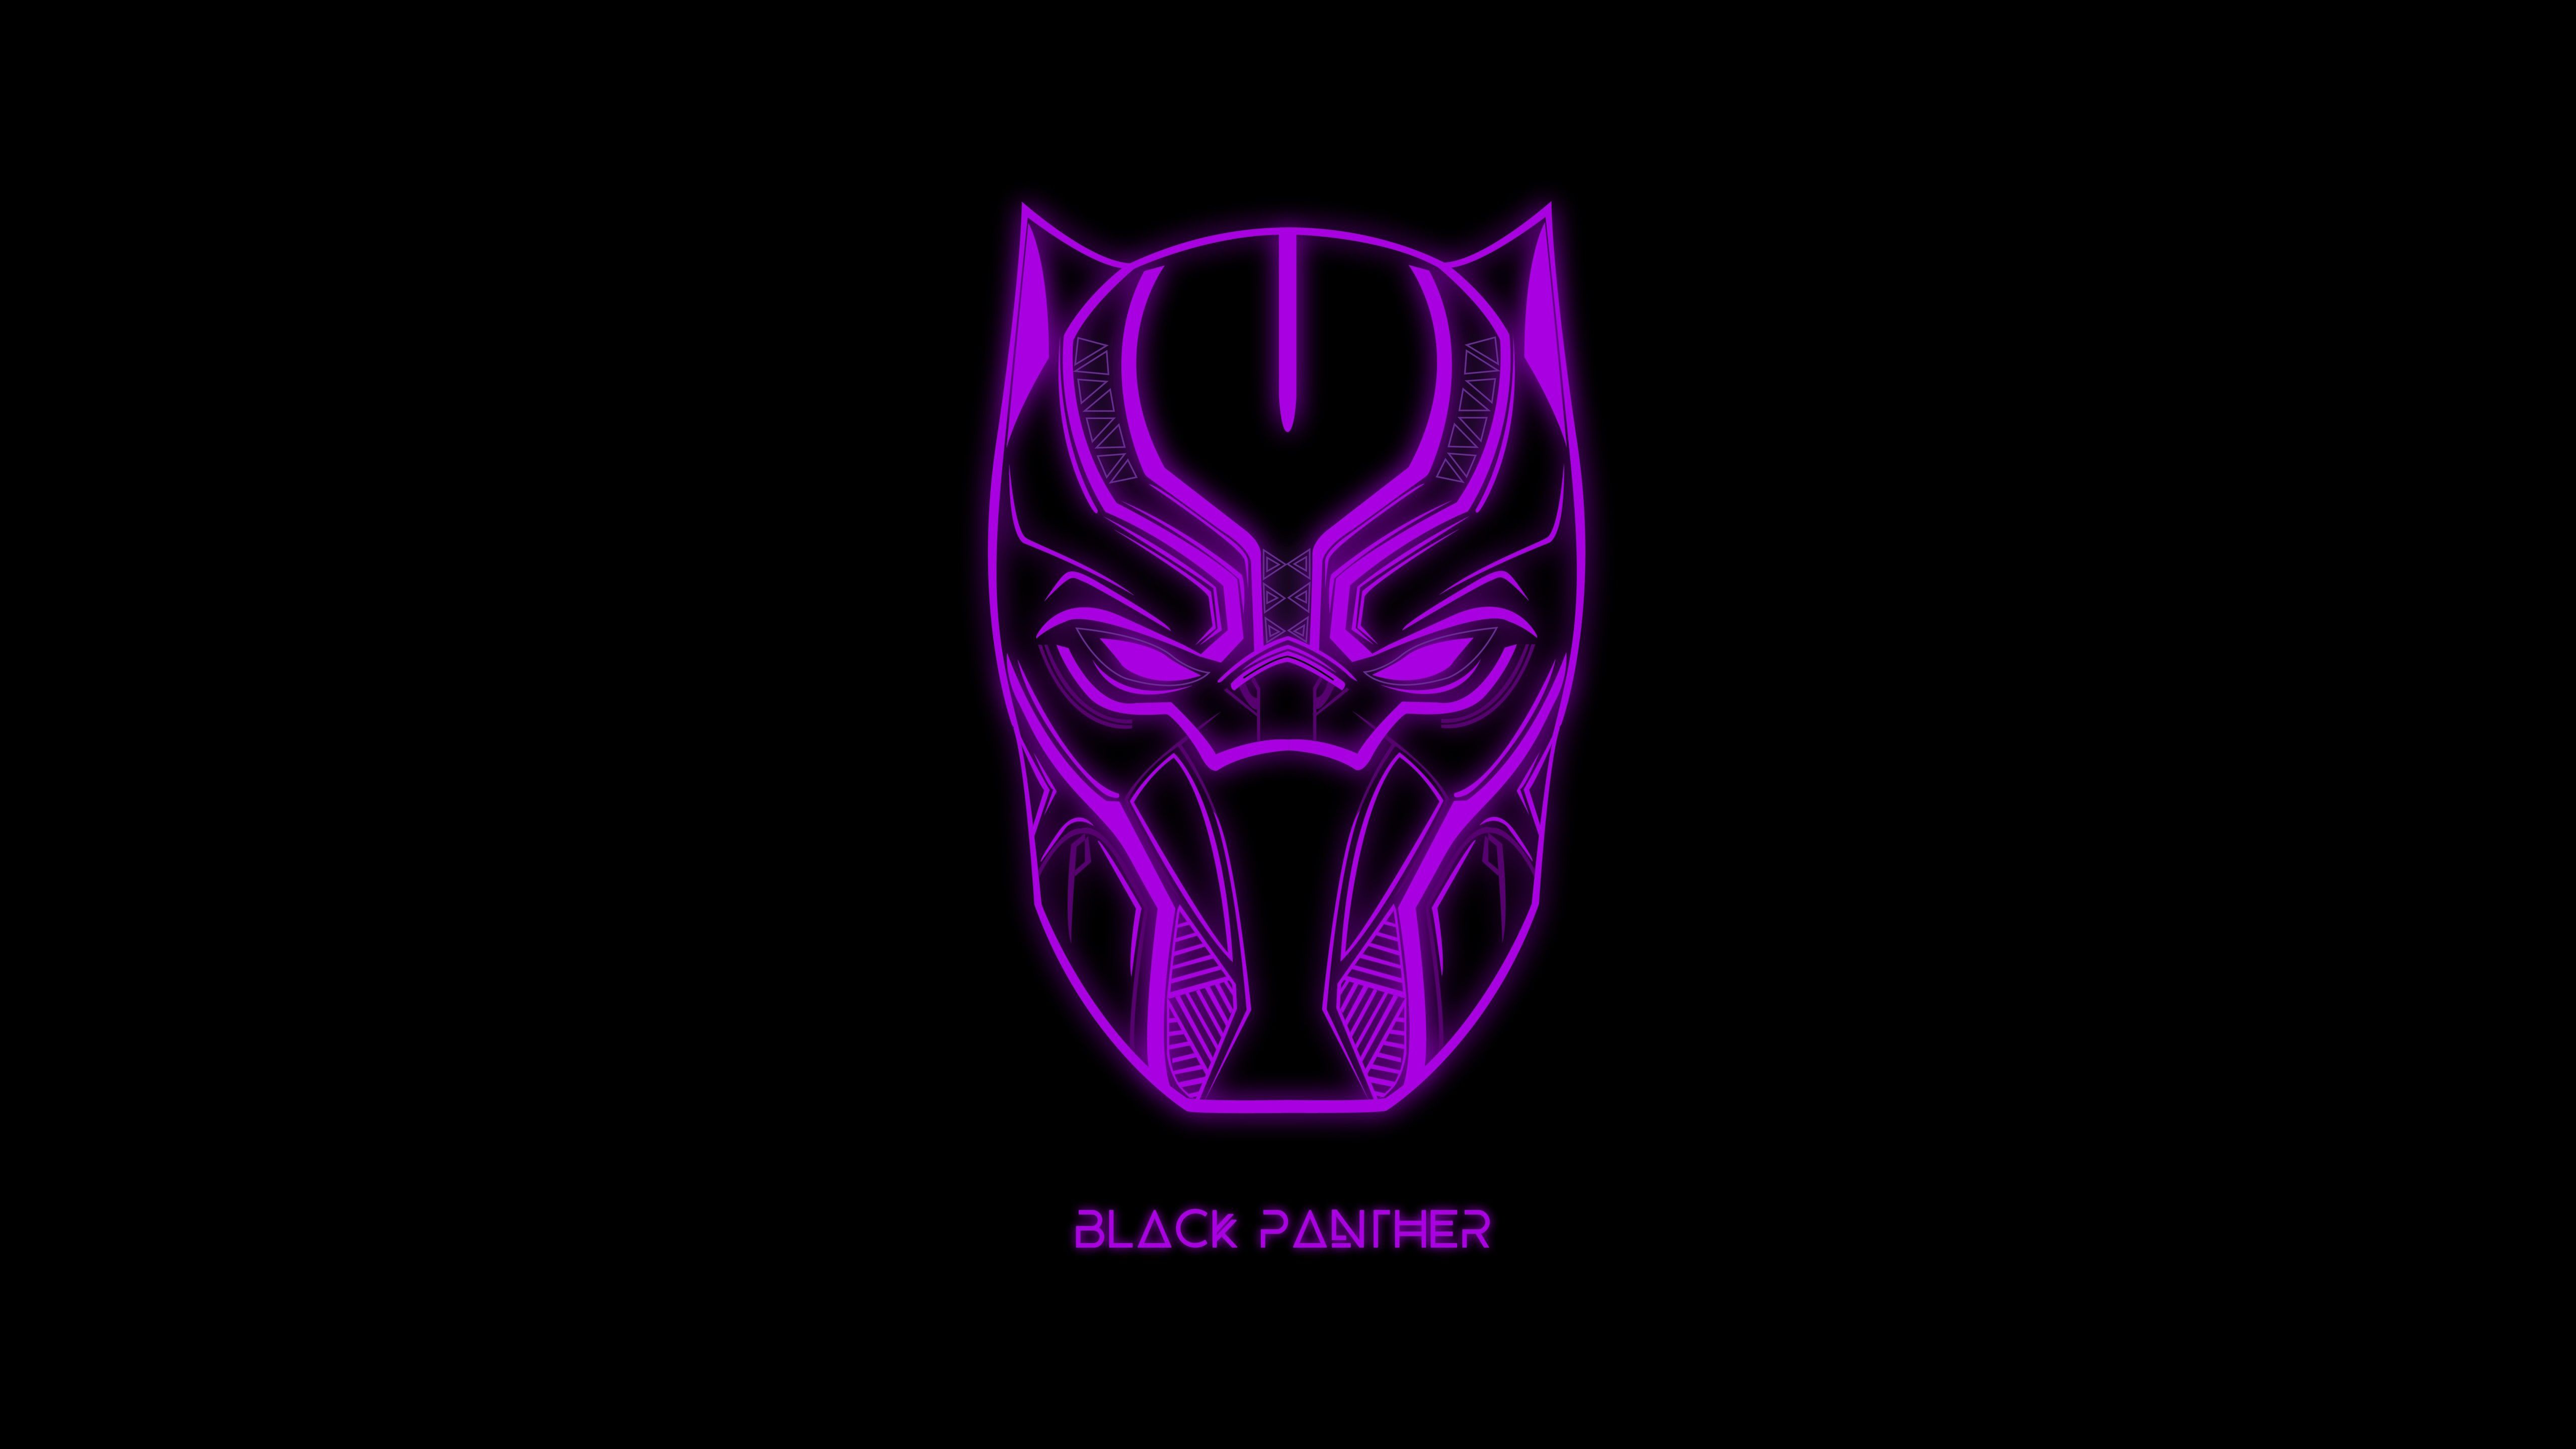 Black Panther Dark IPhone Wallpaper  IPhone Wallpapers  iPhone Wallpapers